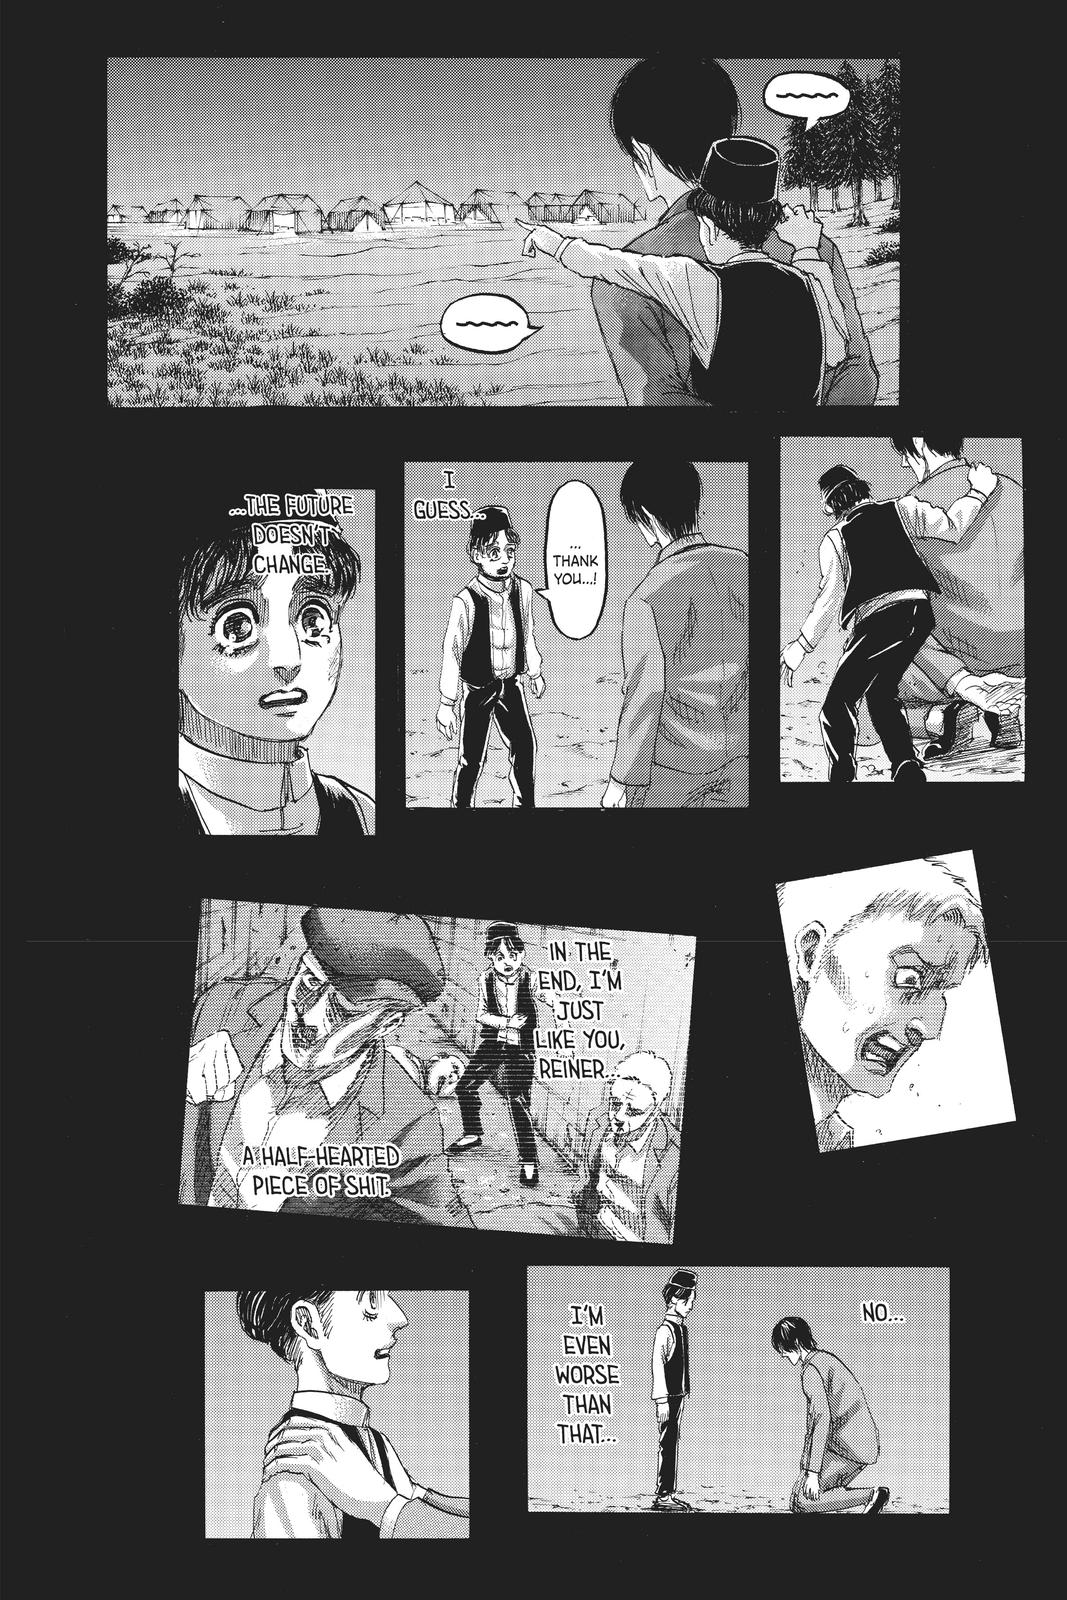 Shingeki No Kyojin, chapter 131 - Attack On Titan Manga Online